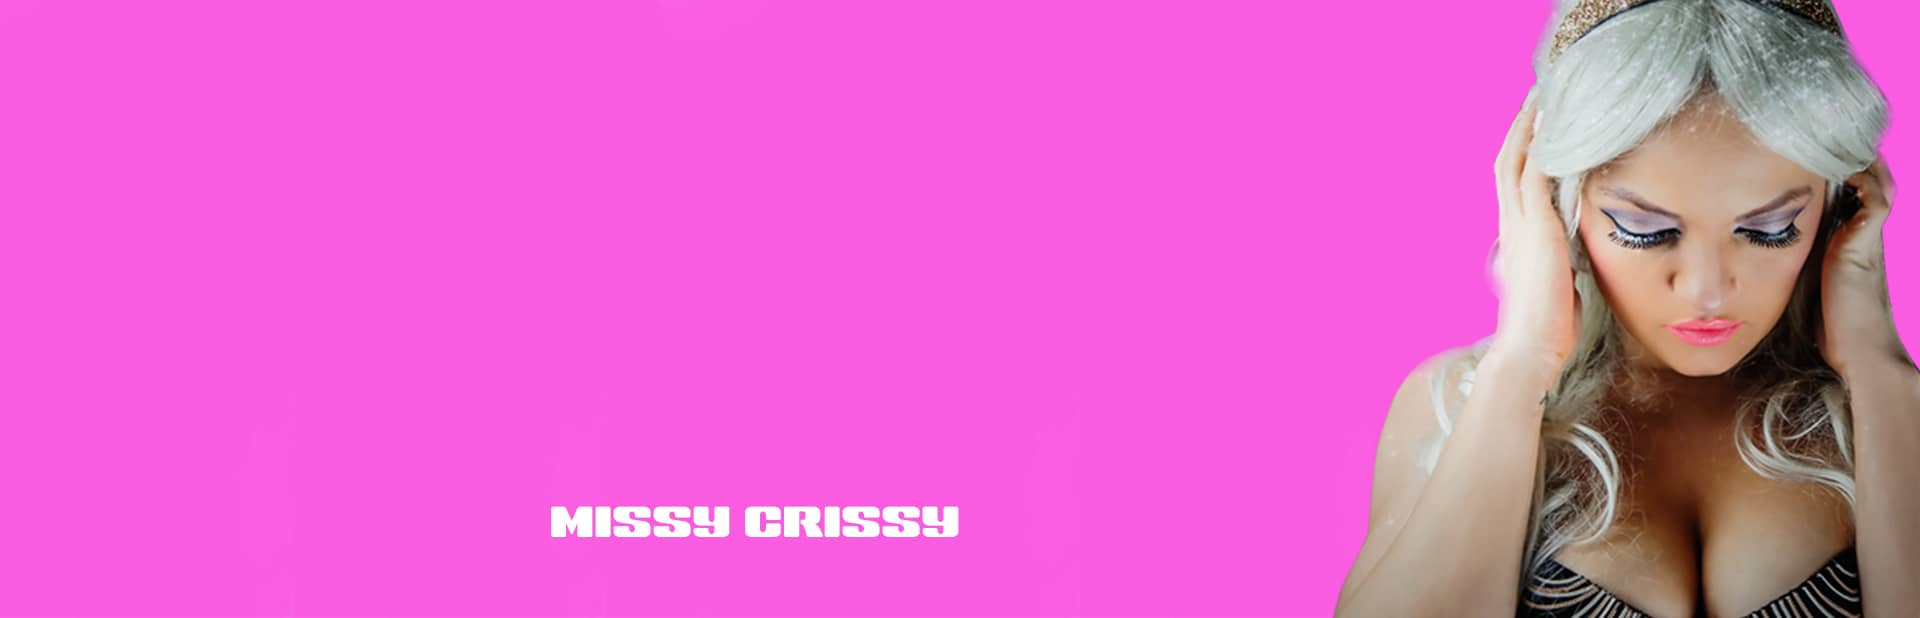 BPP – Blue Pie Records – Missy Crissy – Banner.jpg